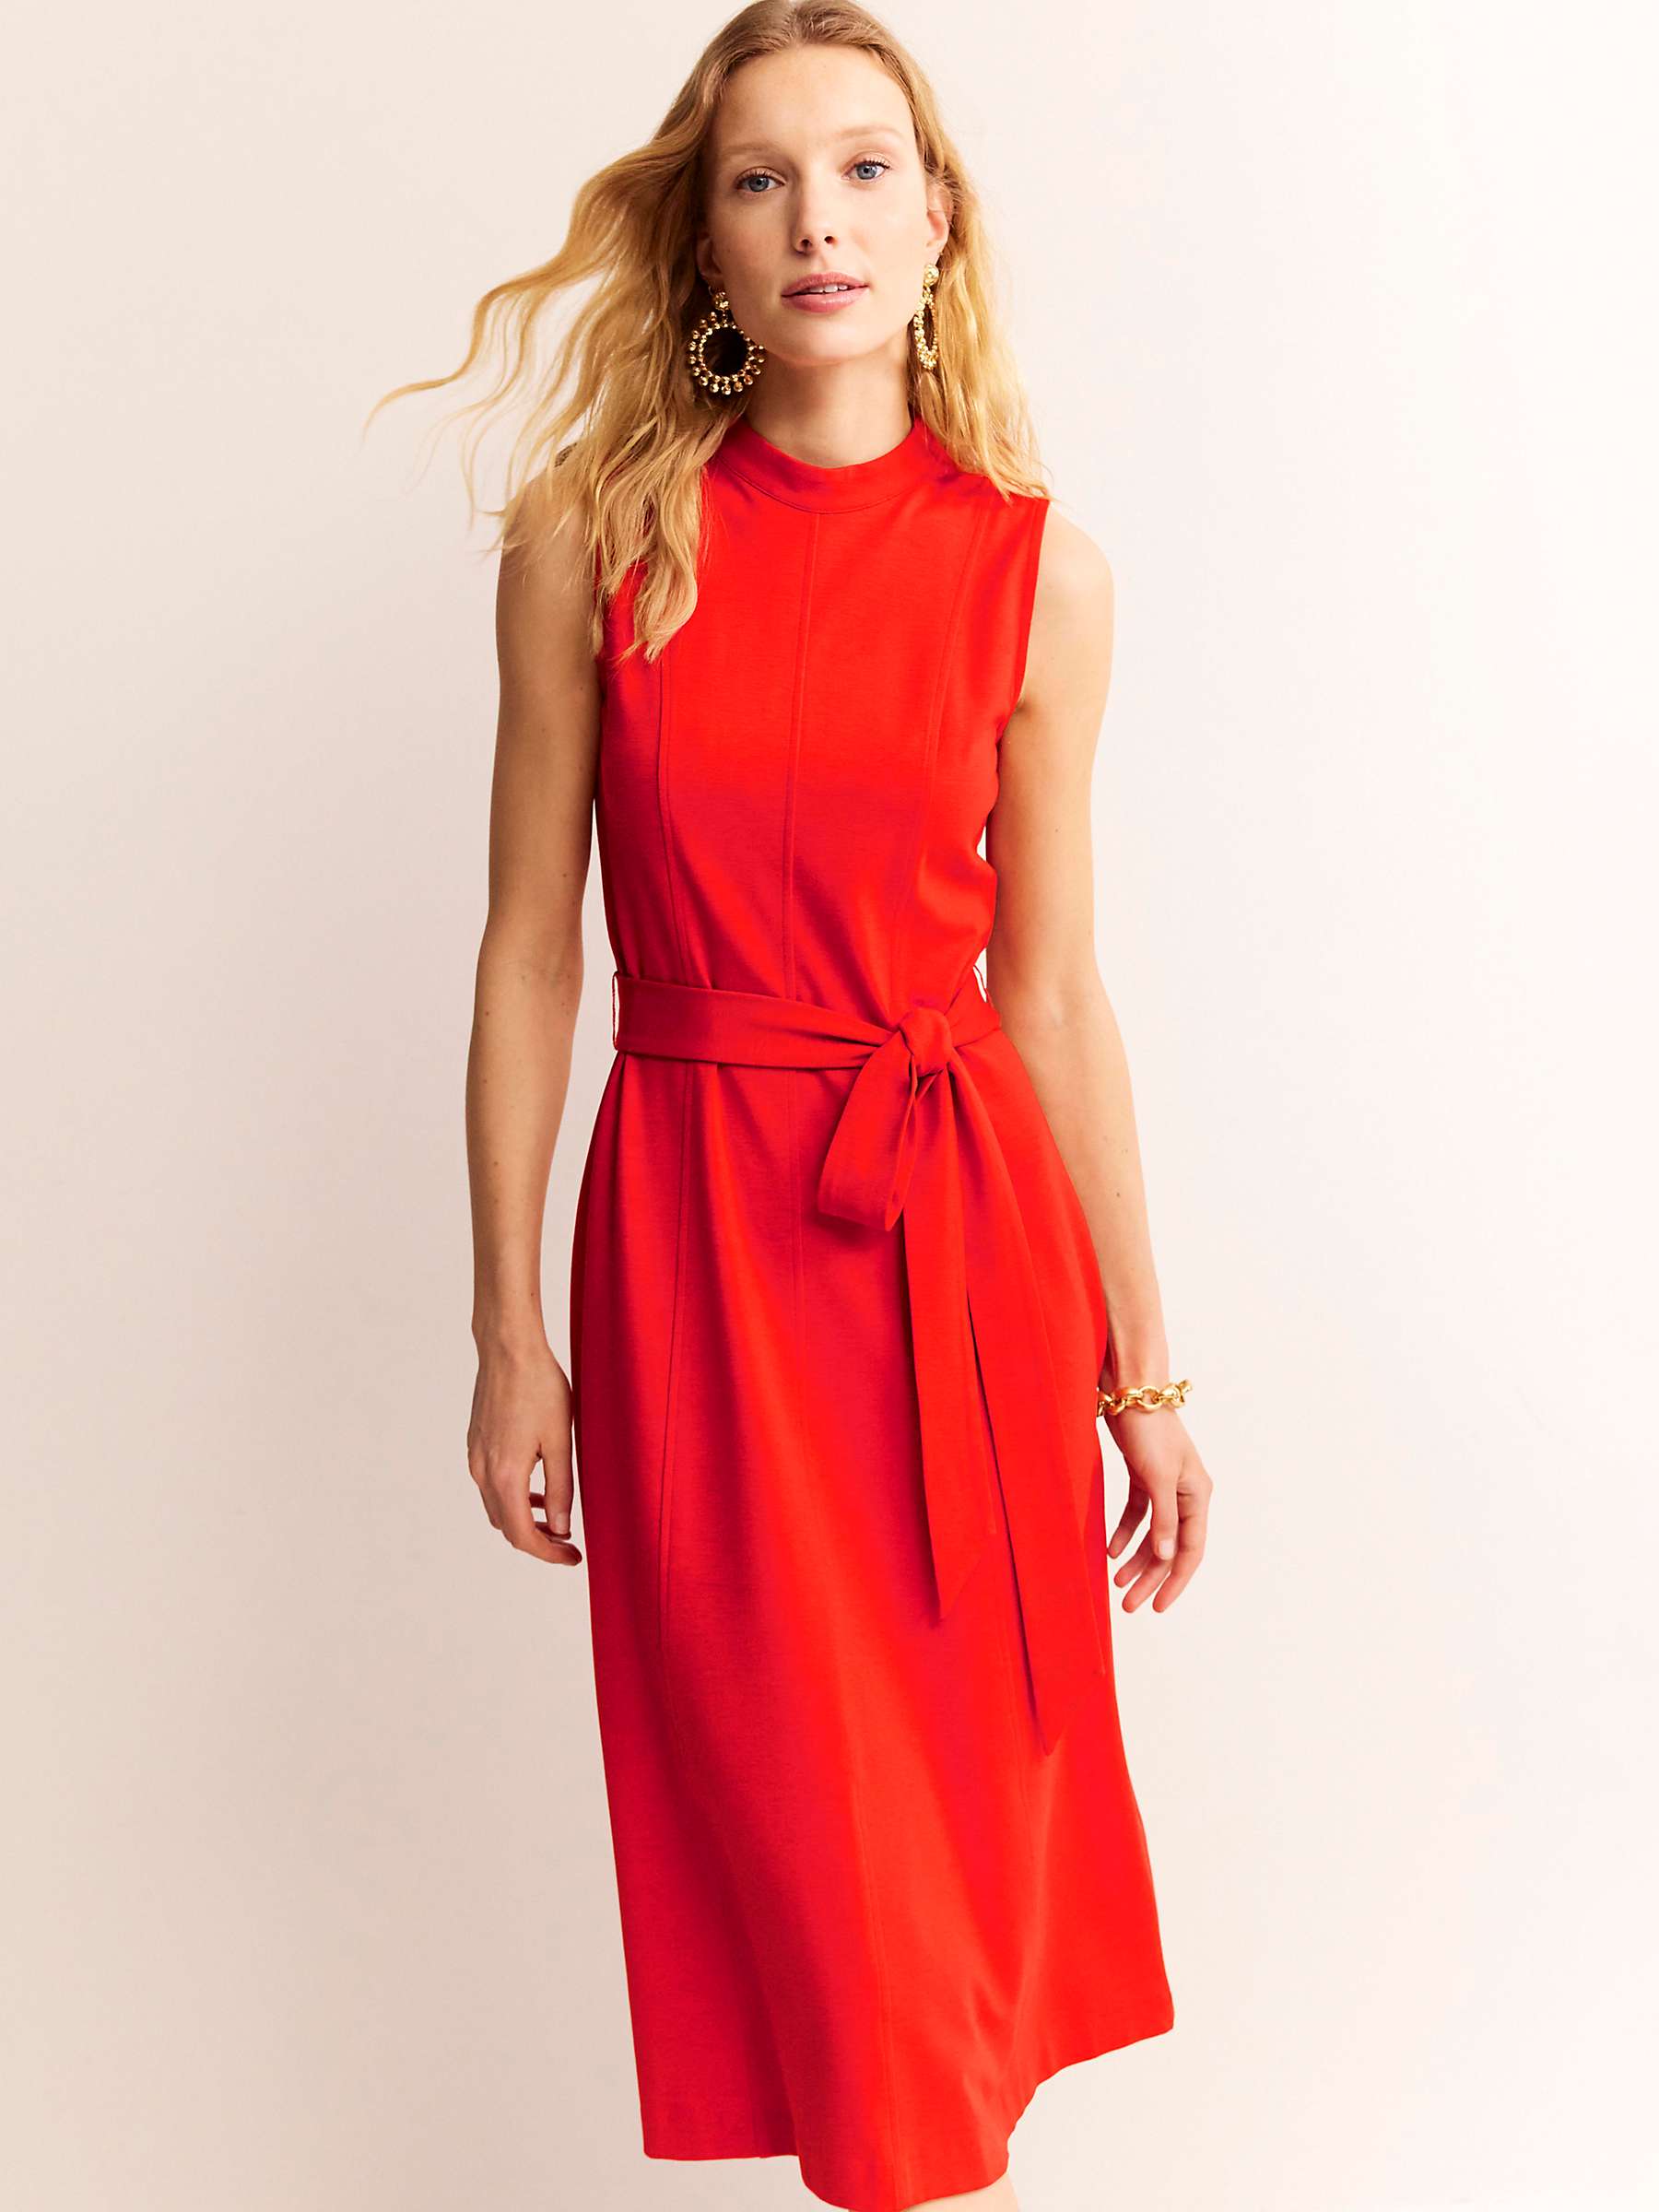 Buy Boden Nicola High Neck Sleeveless Dress, Fiesta Online at johnlewis.com